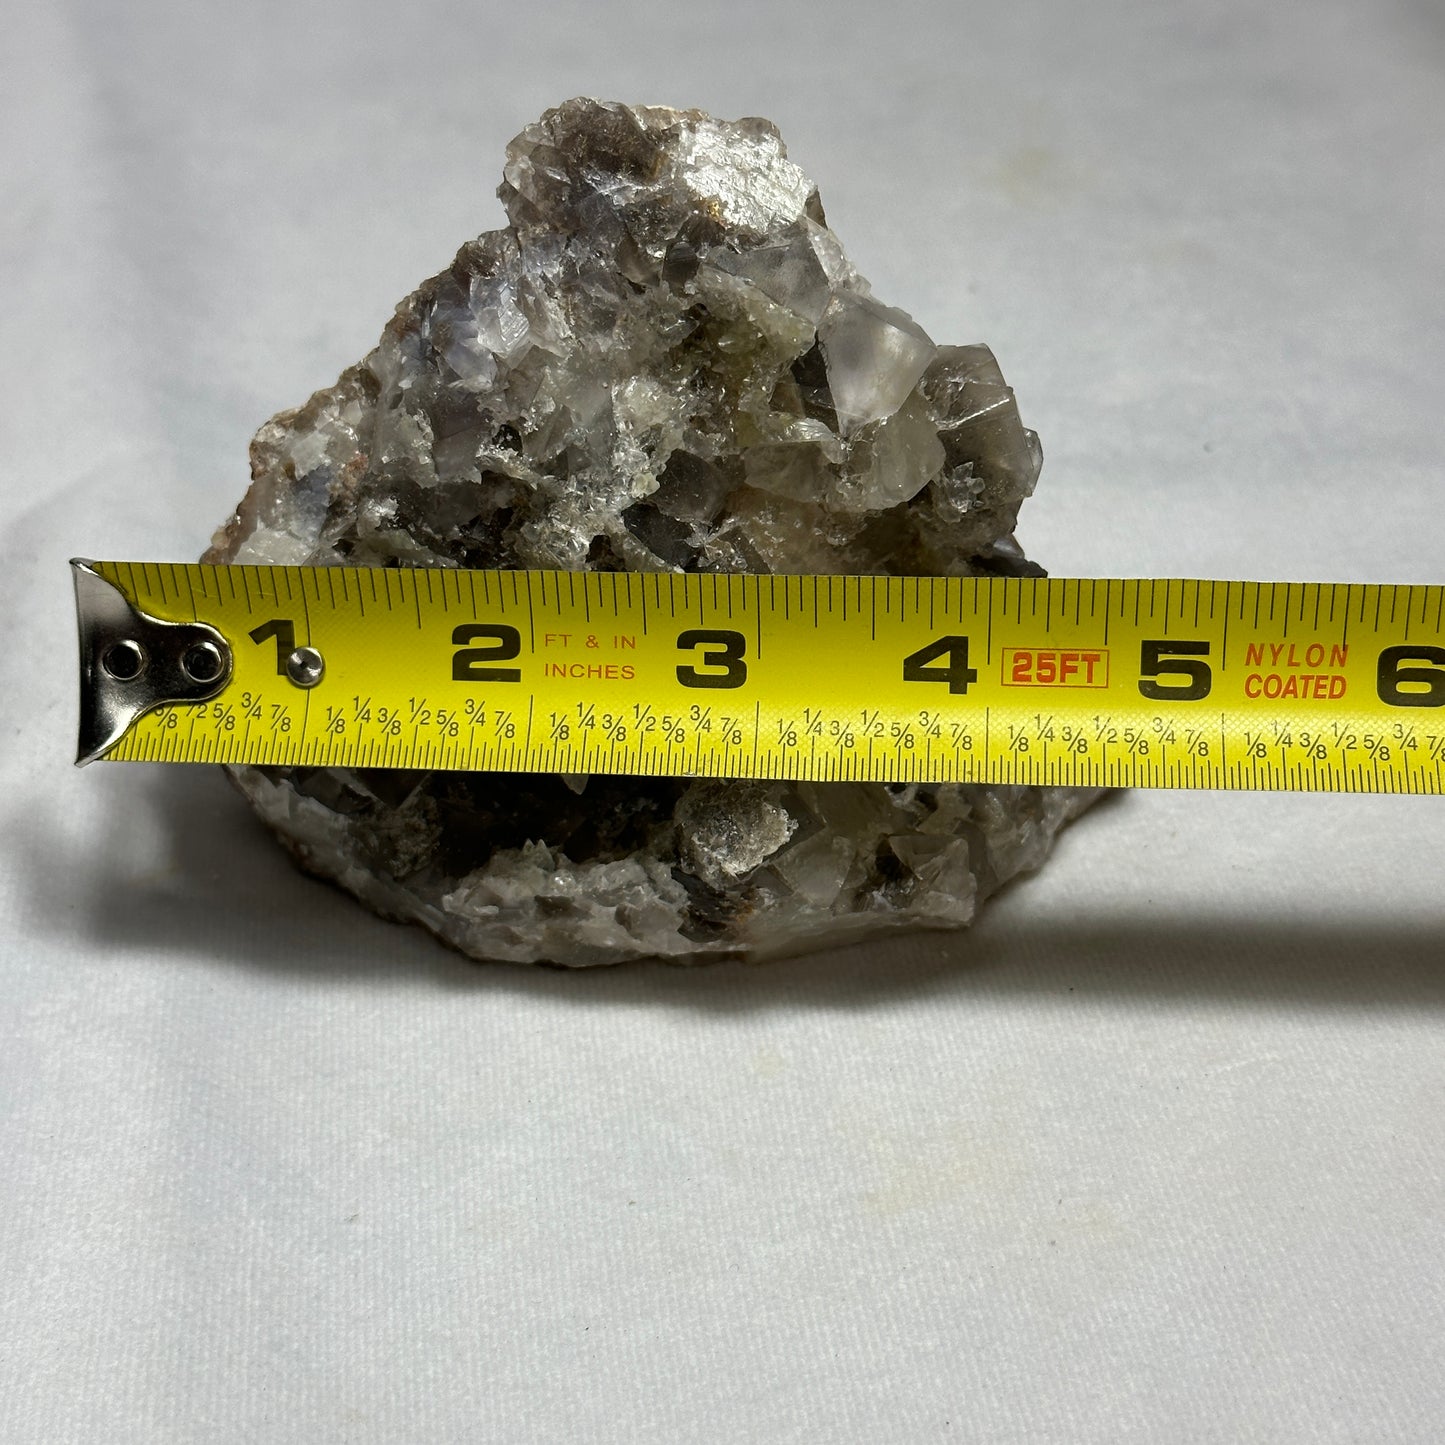 Beautiful Fluorite and Dogtooth Calcite Specimen